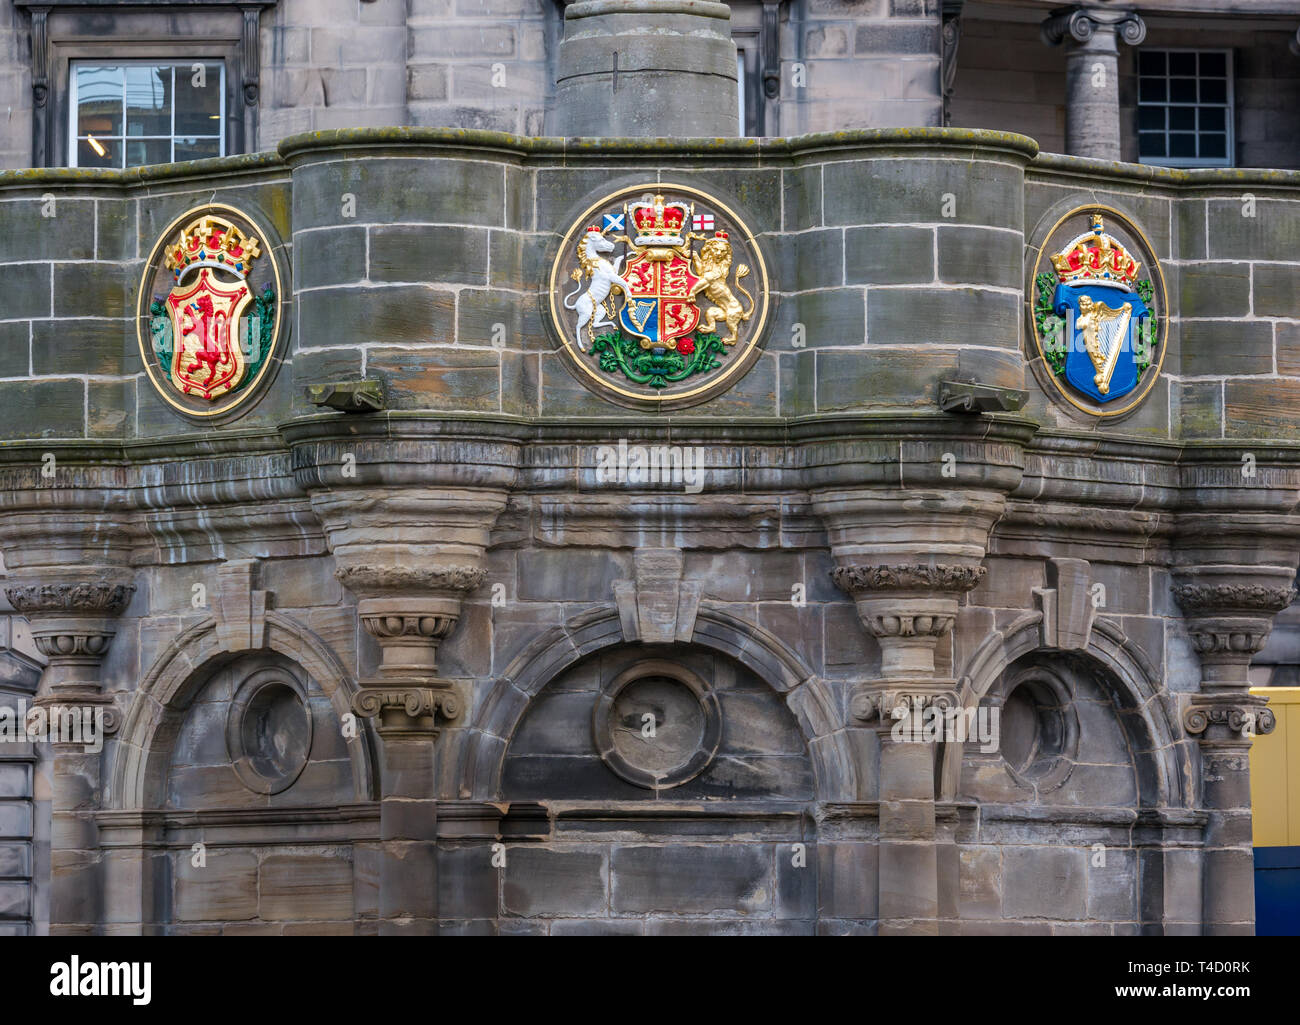 Scottish Royal coat of arms, Mercat Cross, Parliament Square, Royal Mile, Edinburgh, Scotland, UK Stock Photo